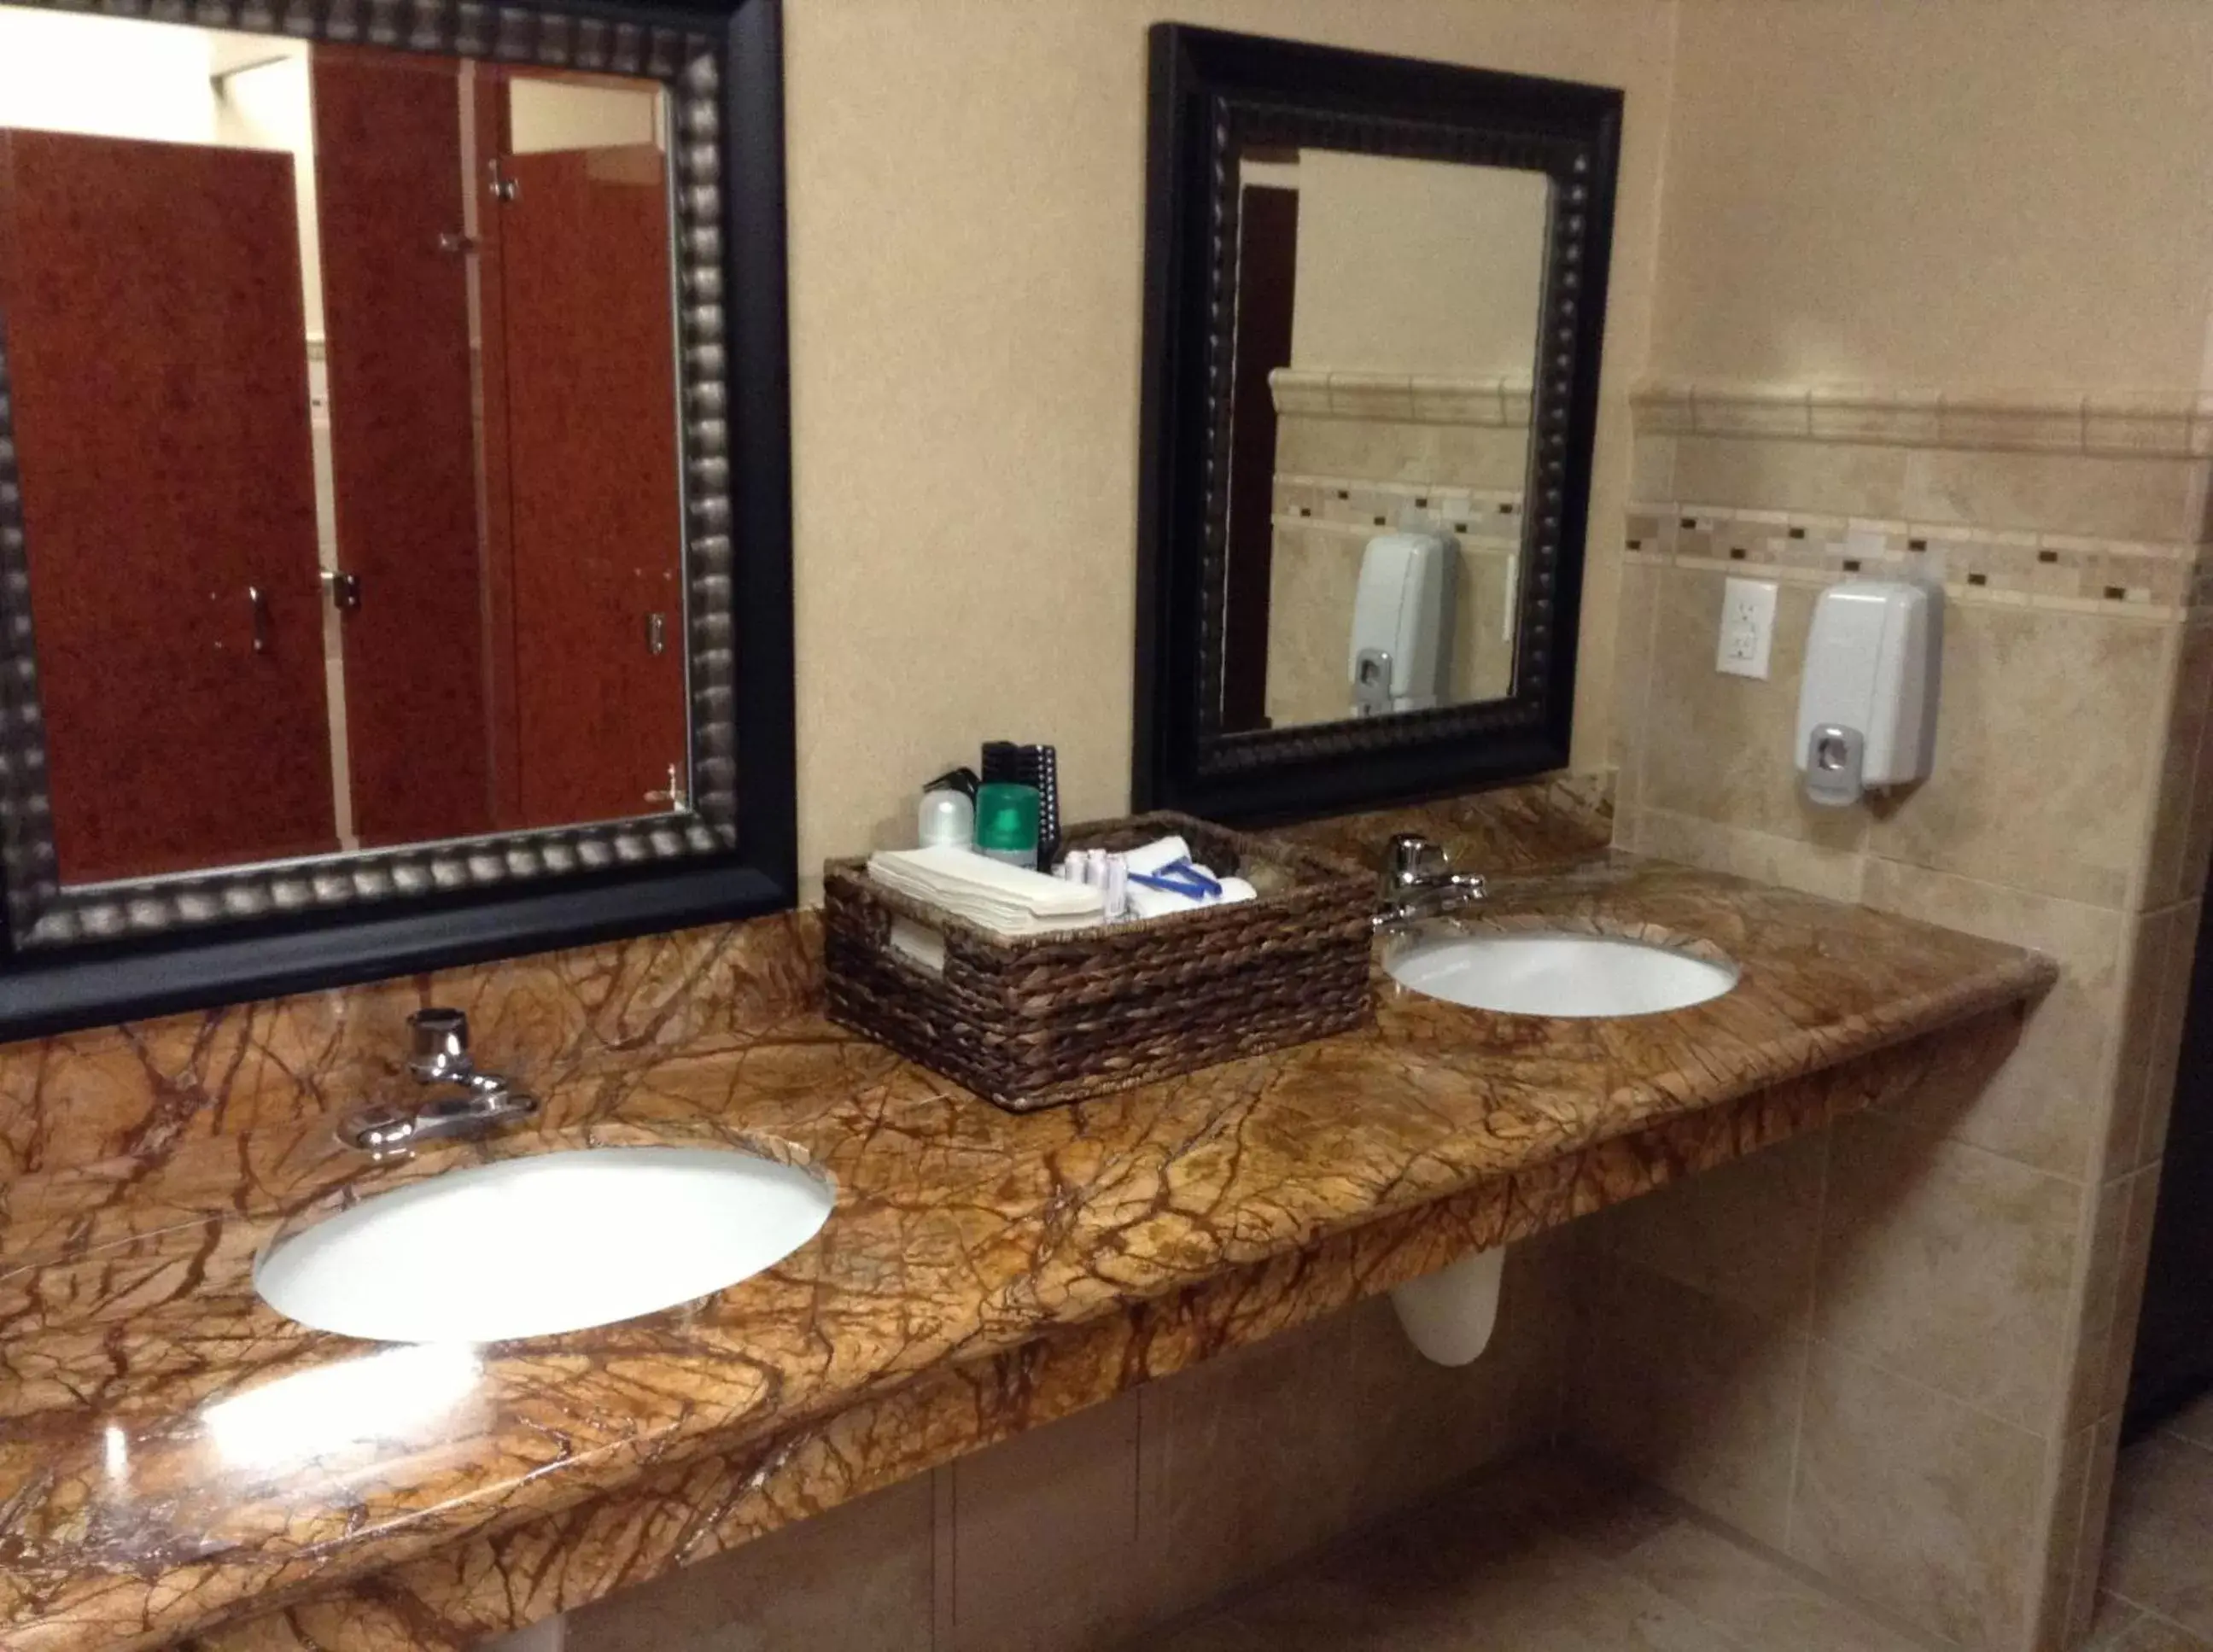 Bathroom in Borrego Springs Resort and Spa